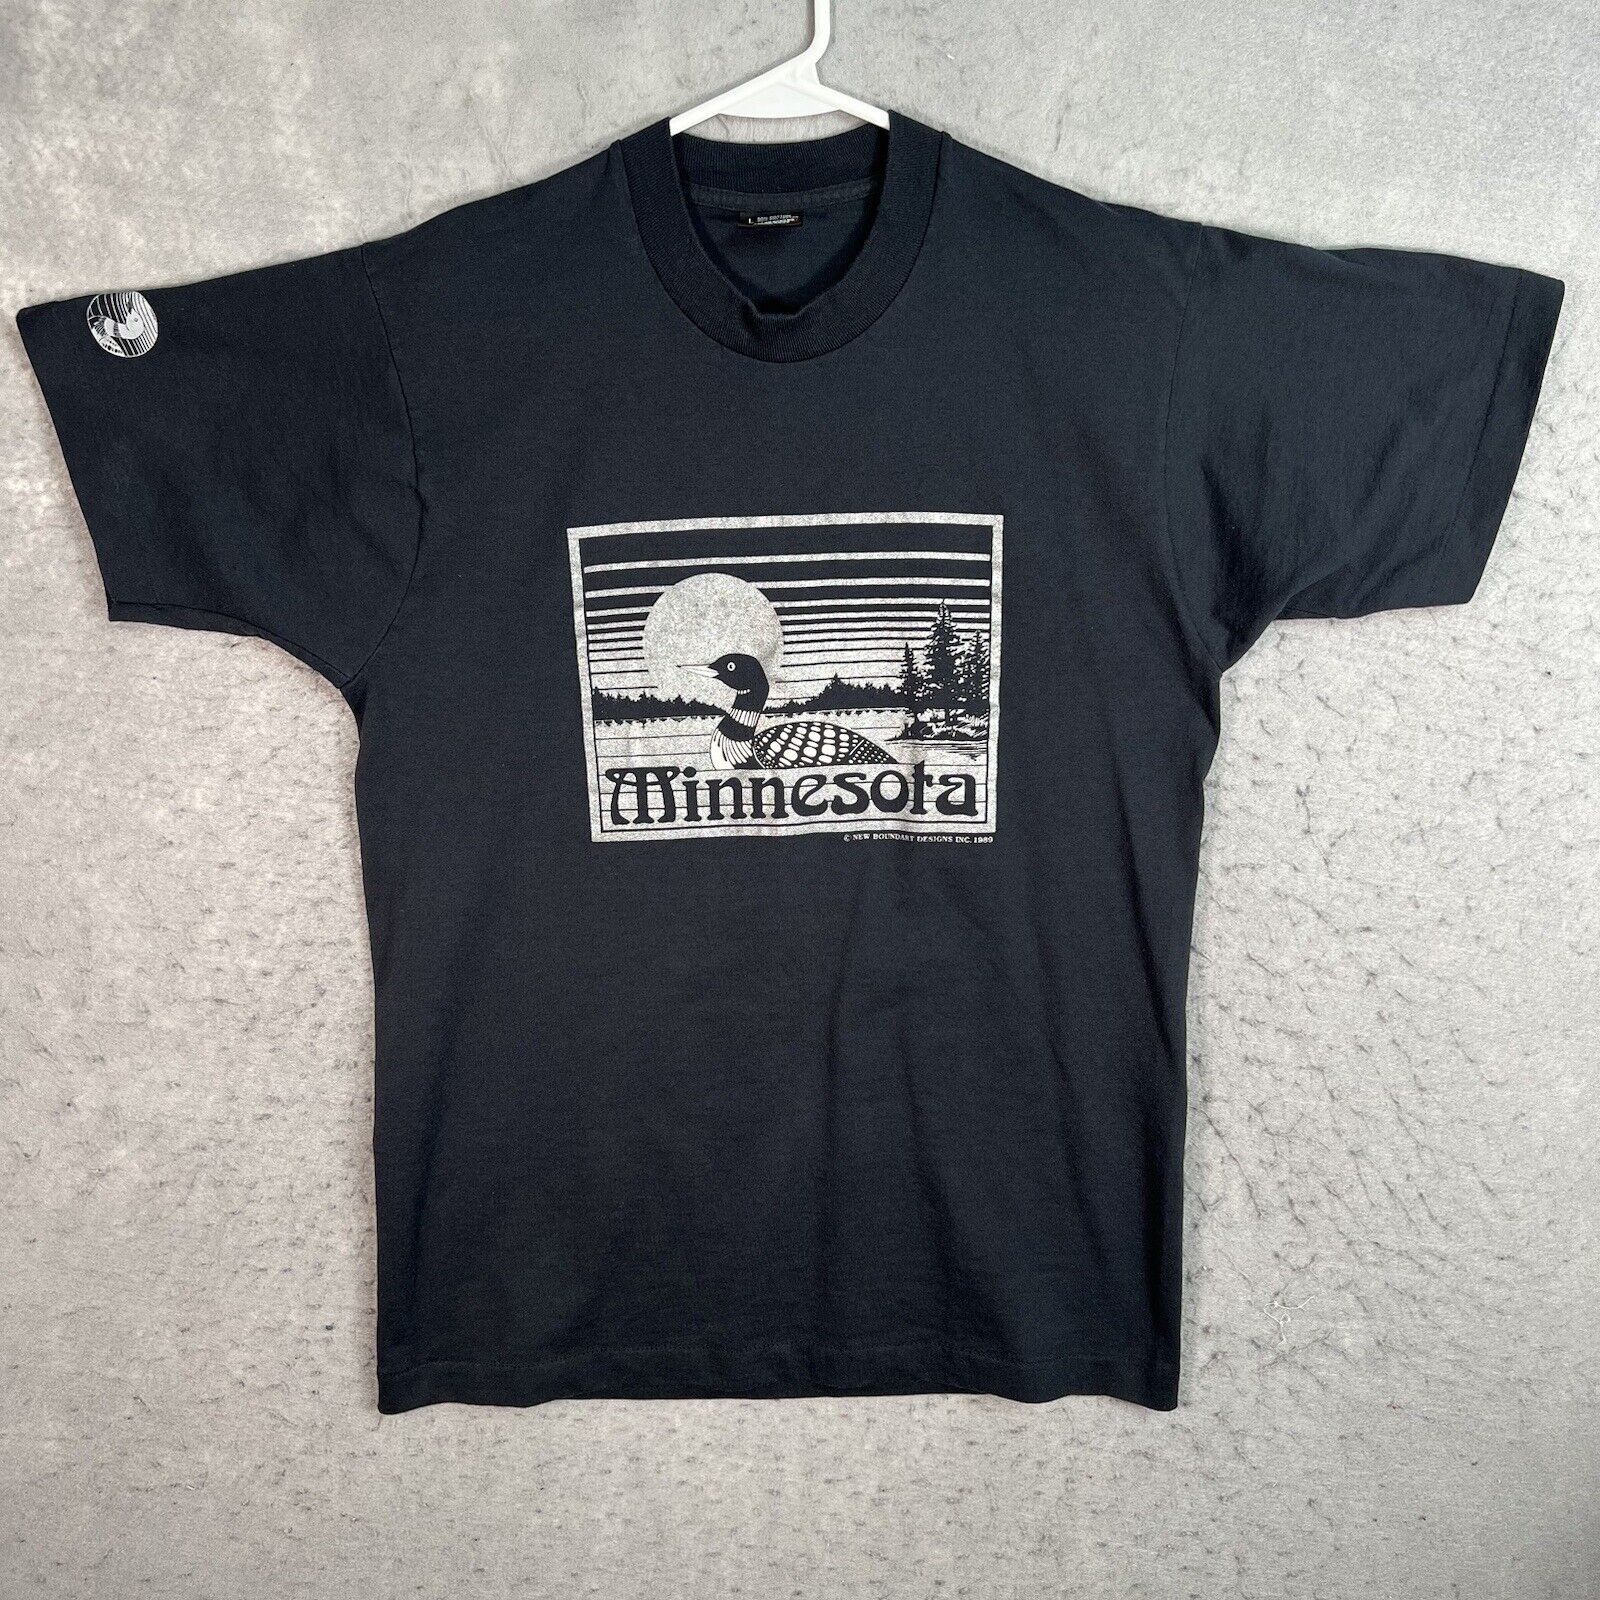 Vintage 90s Minnesota Duck Wildlife Lake T Shirt Adult Large Black USA Made Mens